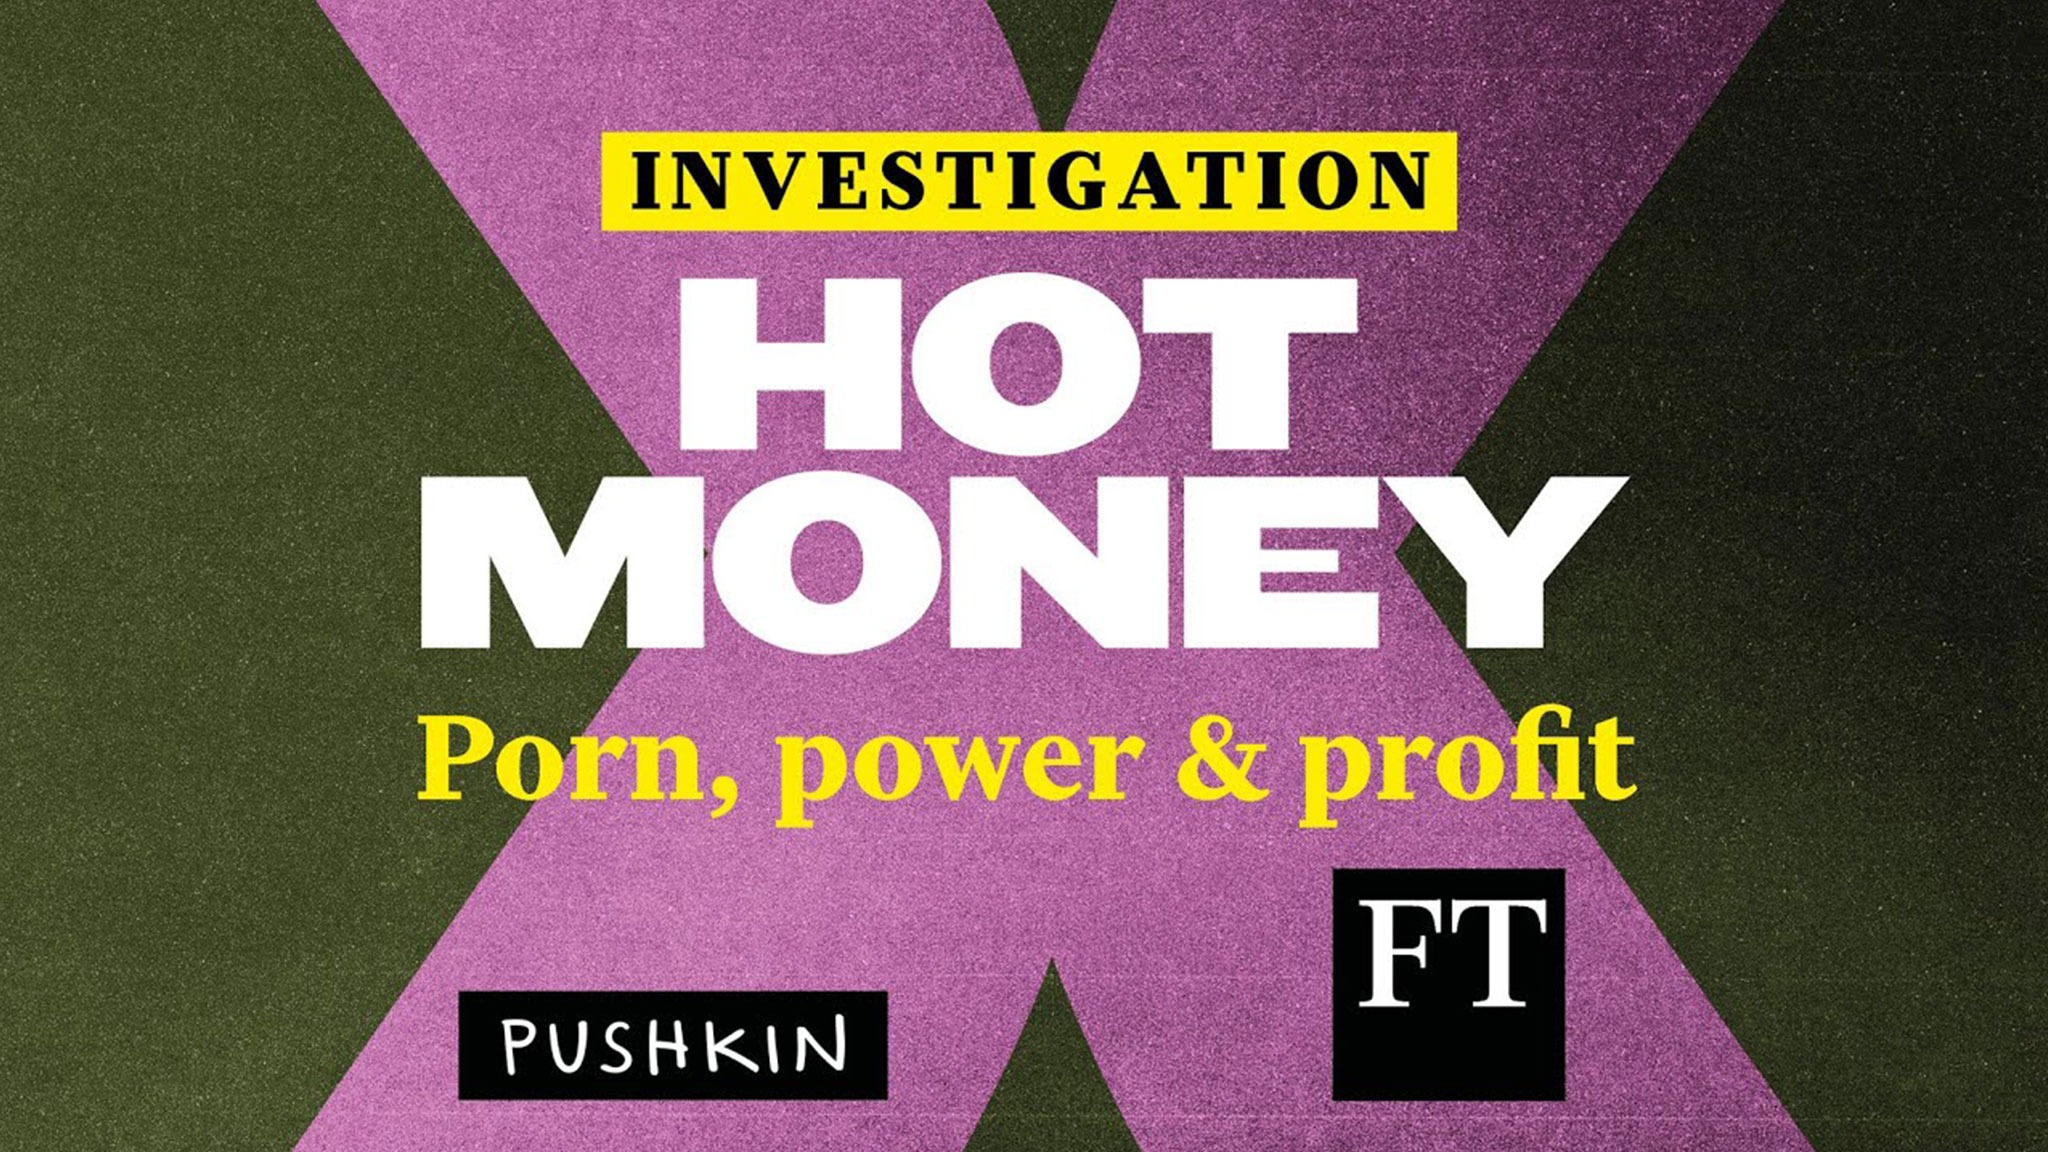 Www Tip Xtube Com - Porn meets the internet | Financial Times